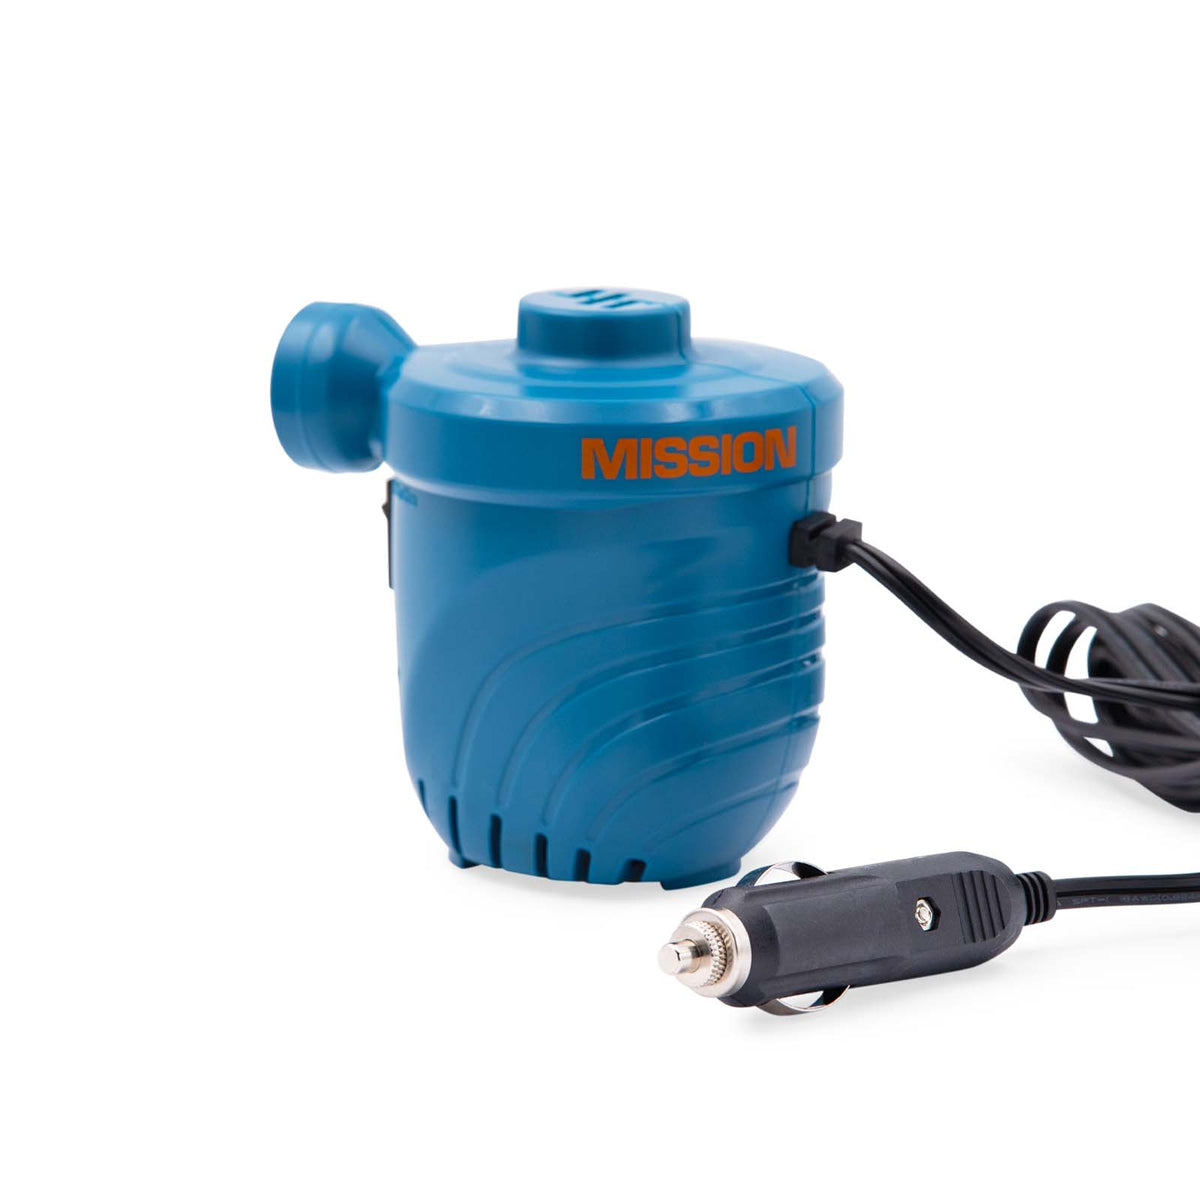 12v DC Electric Pump | Low Pressure Air Pump for Inflatables